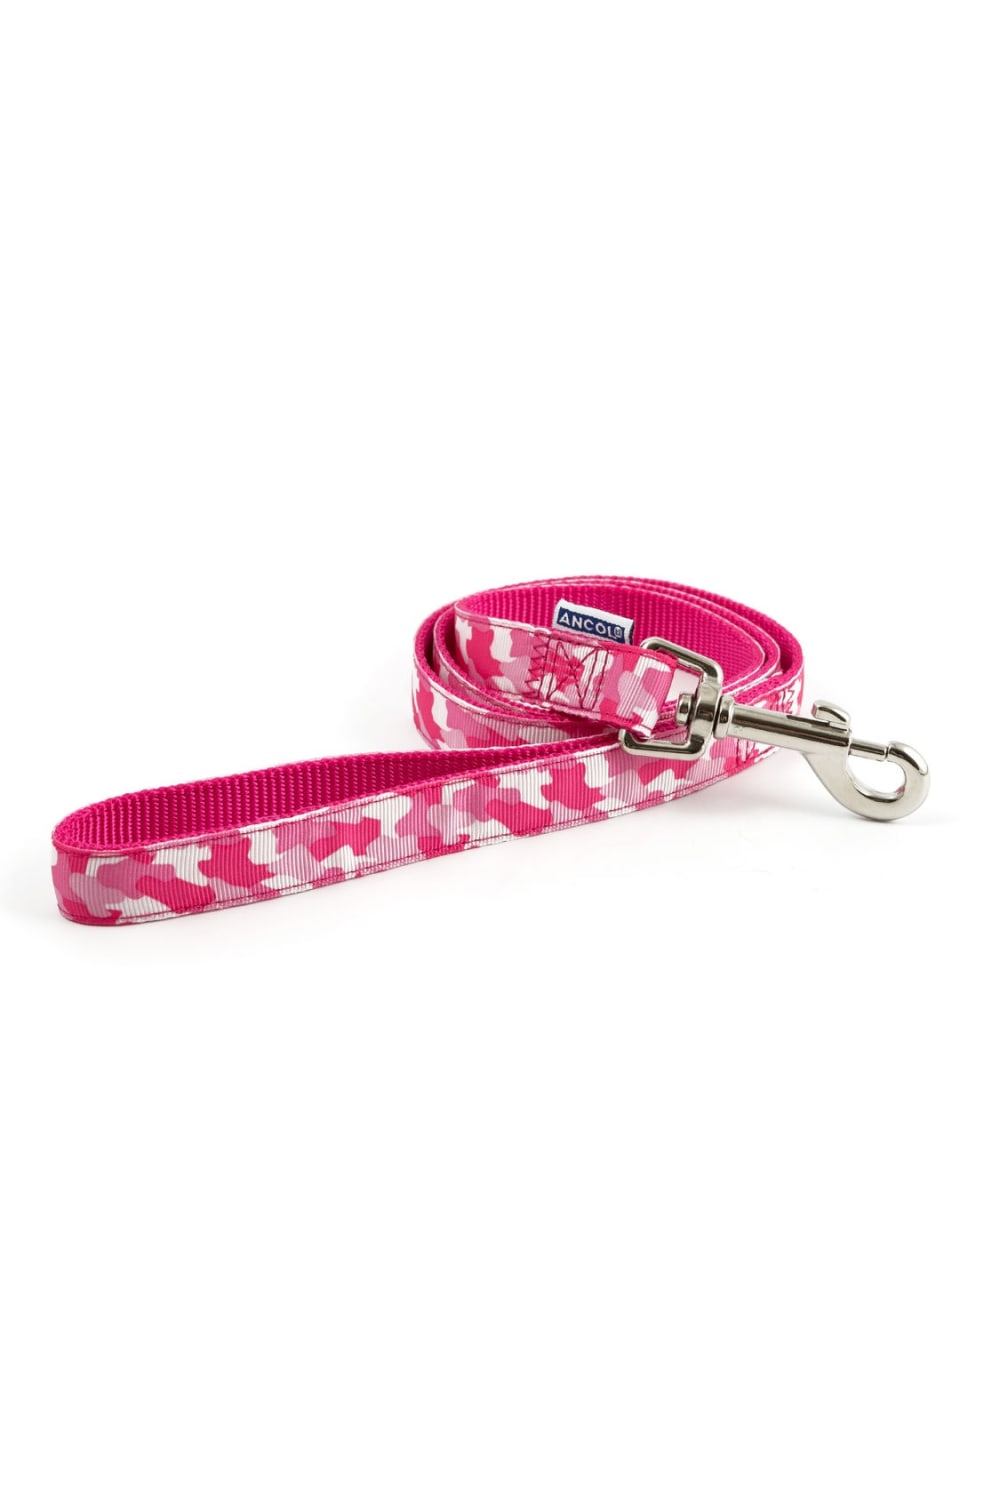 Ancol Nylon Camouflage Dog Leash (Pink) (One Size)